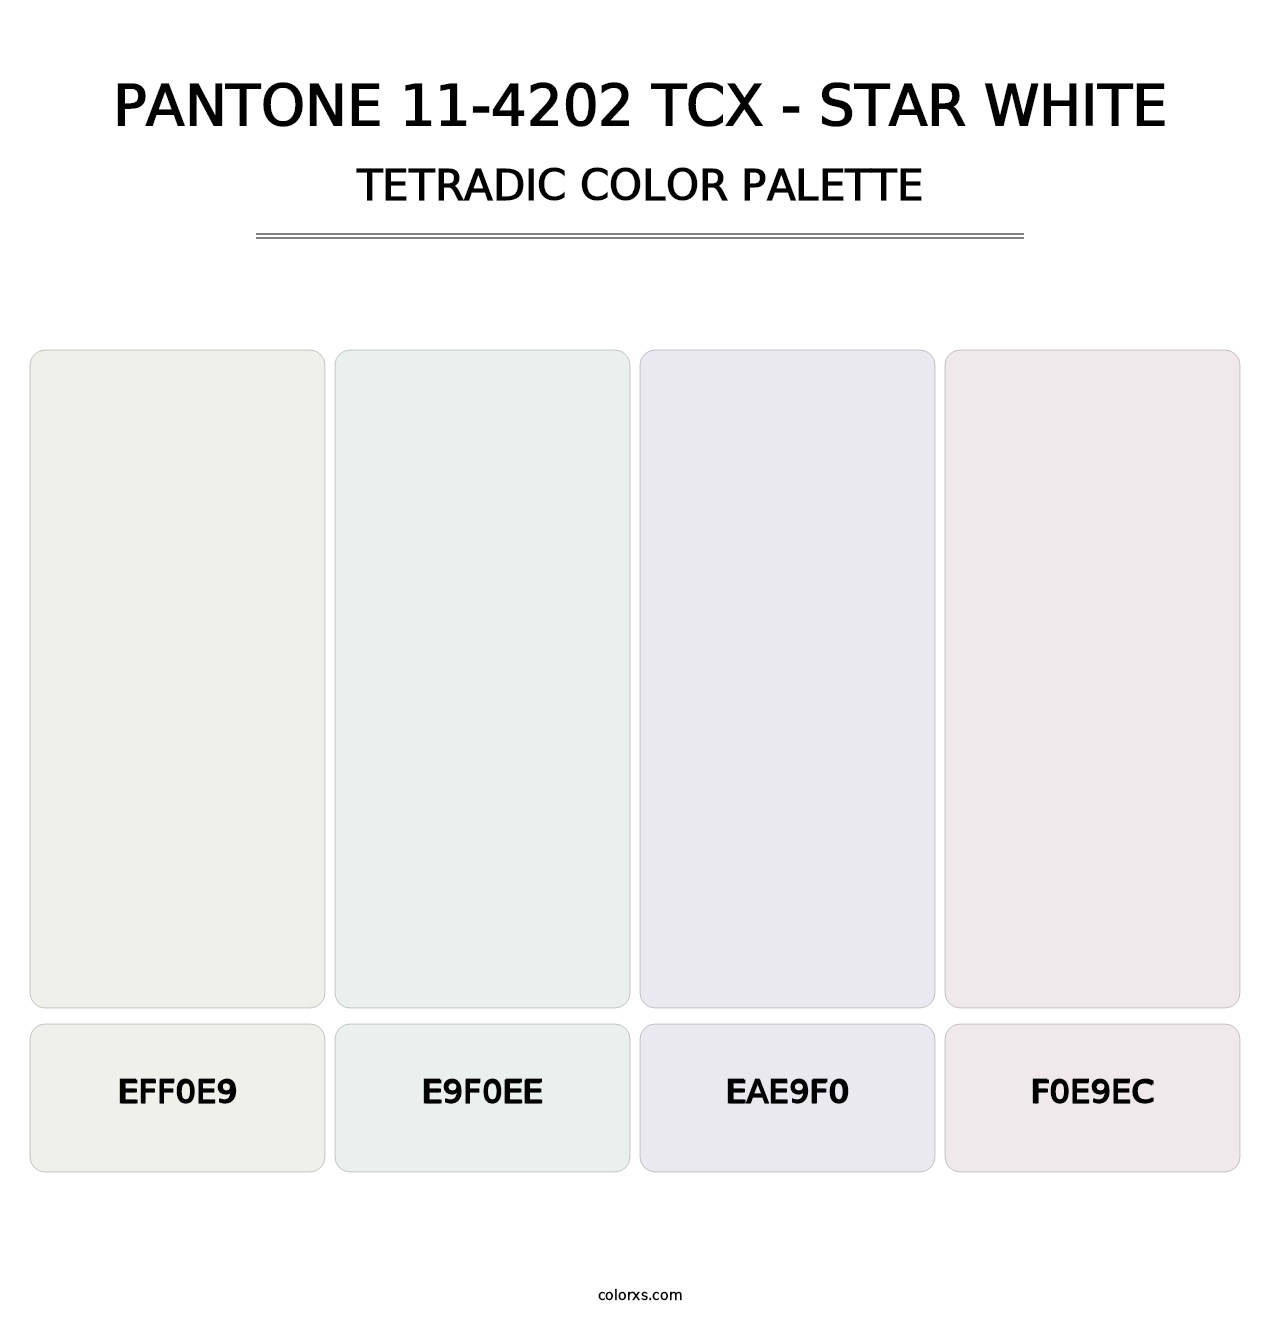 PANTONE 11-4202 TCX - Star White - Tetradic Color Palette